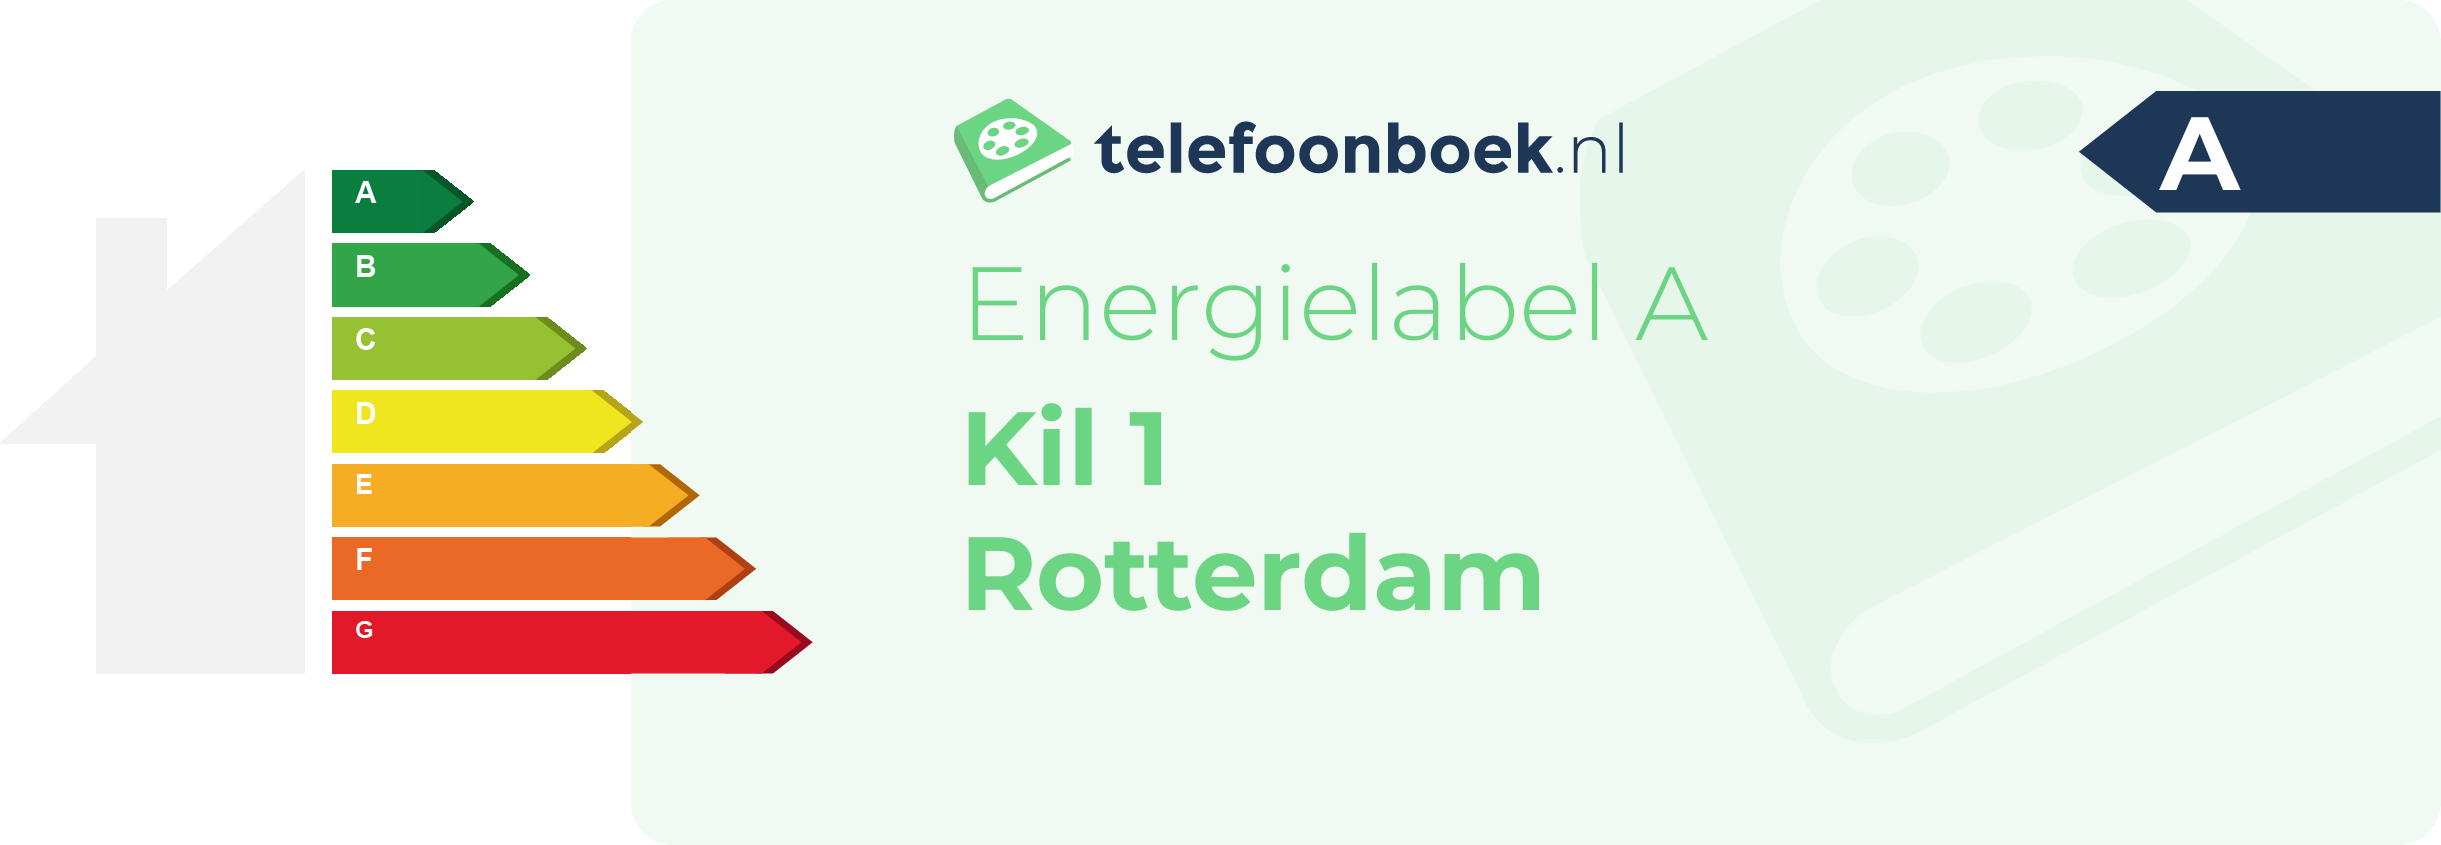 Energielabel Kil 1 Rotterdam